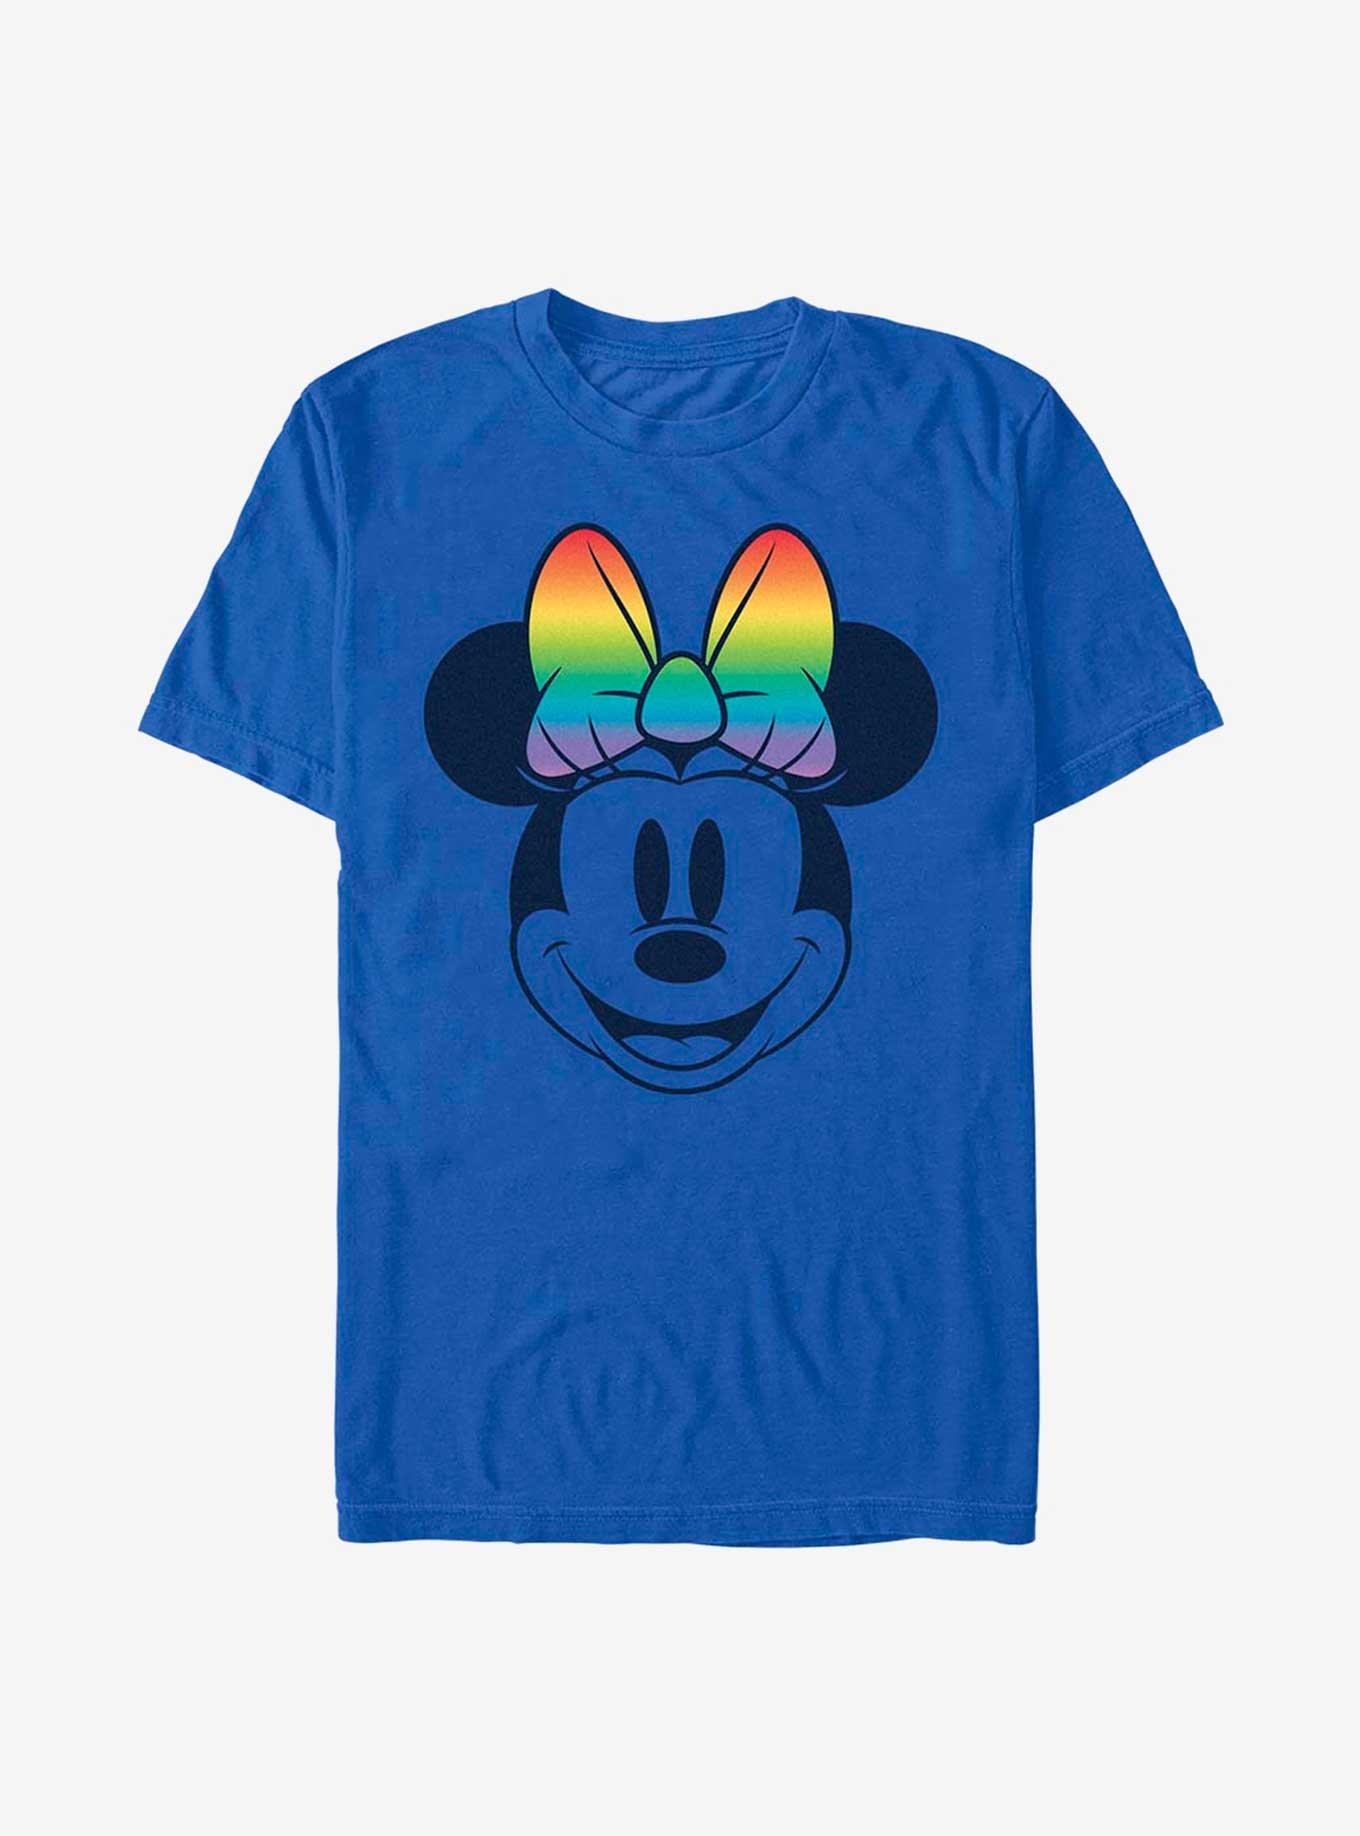 Disney Minnie Mouse Minnie Bow Fill Pride T-Shirt, ROYAL, hi-res